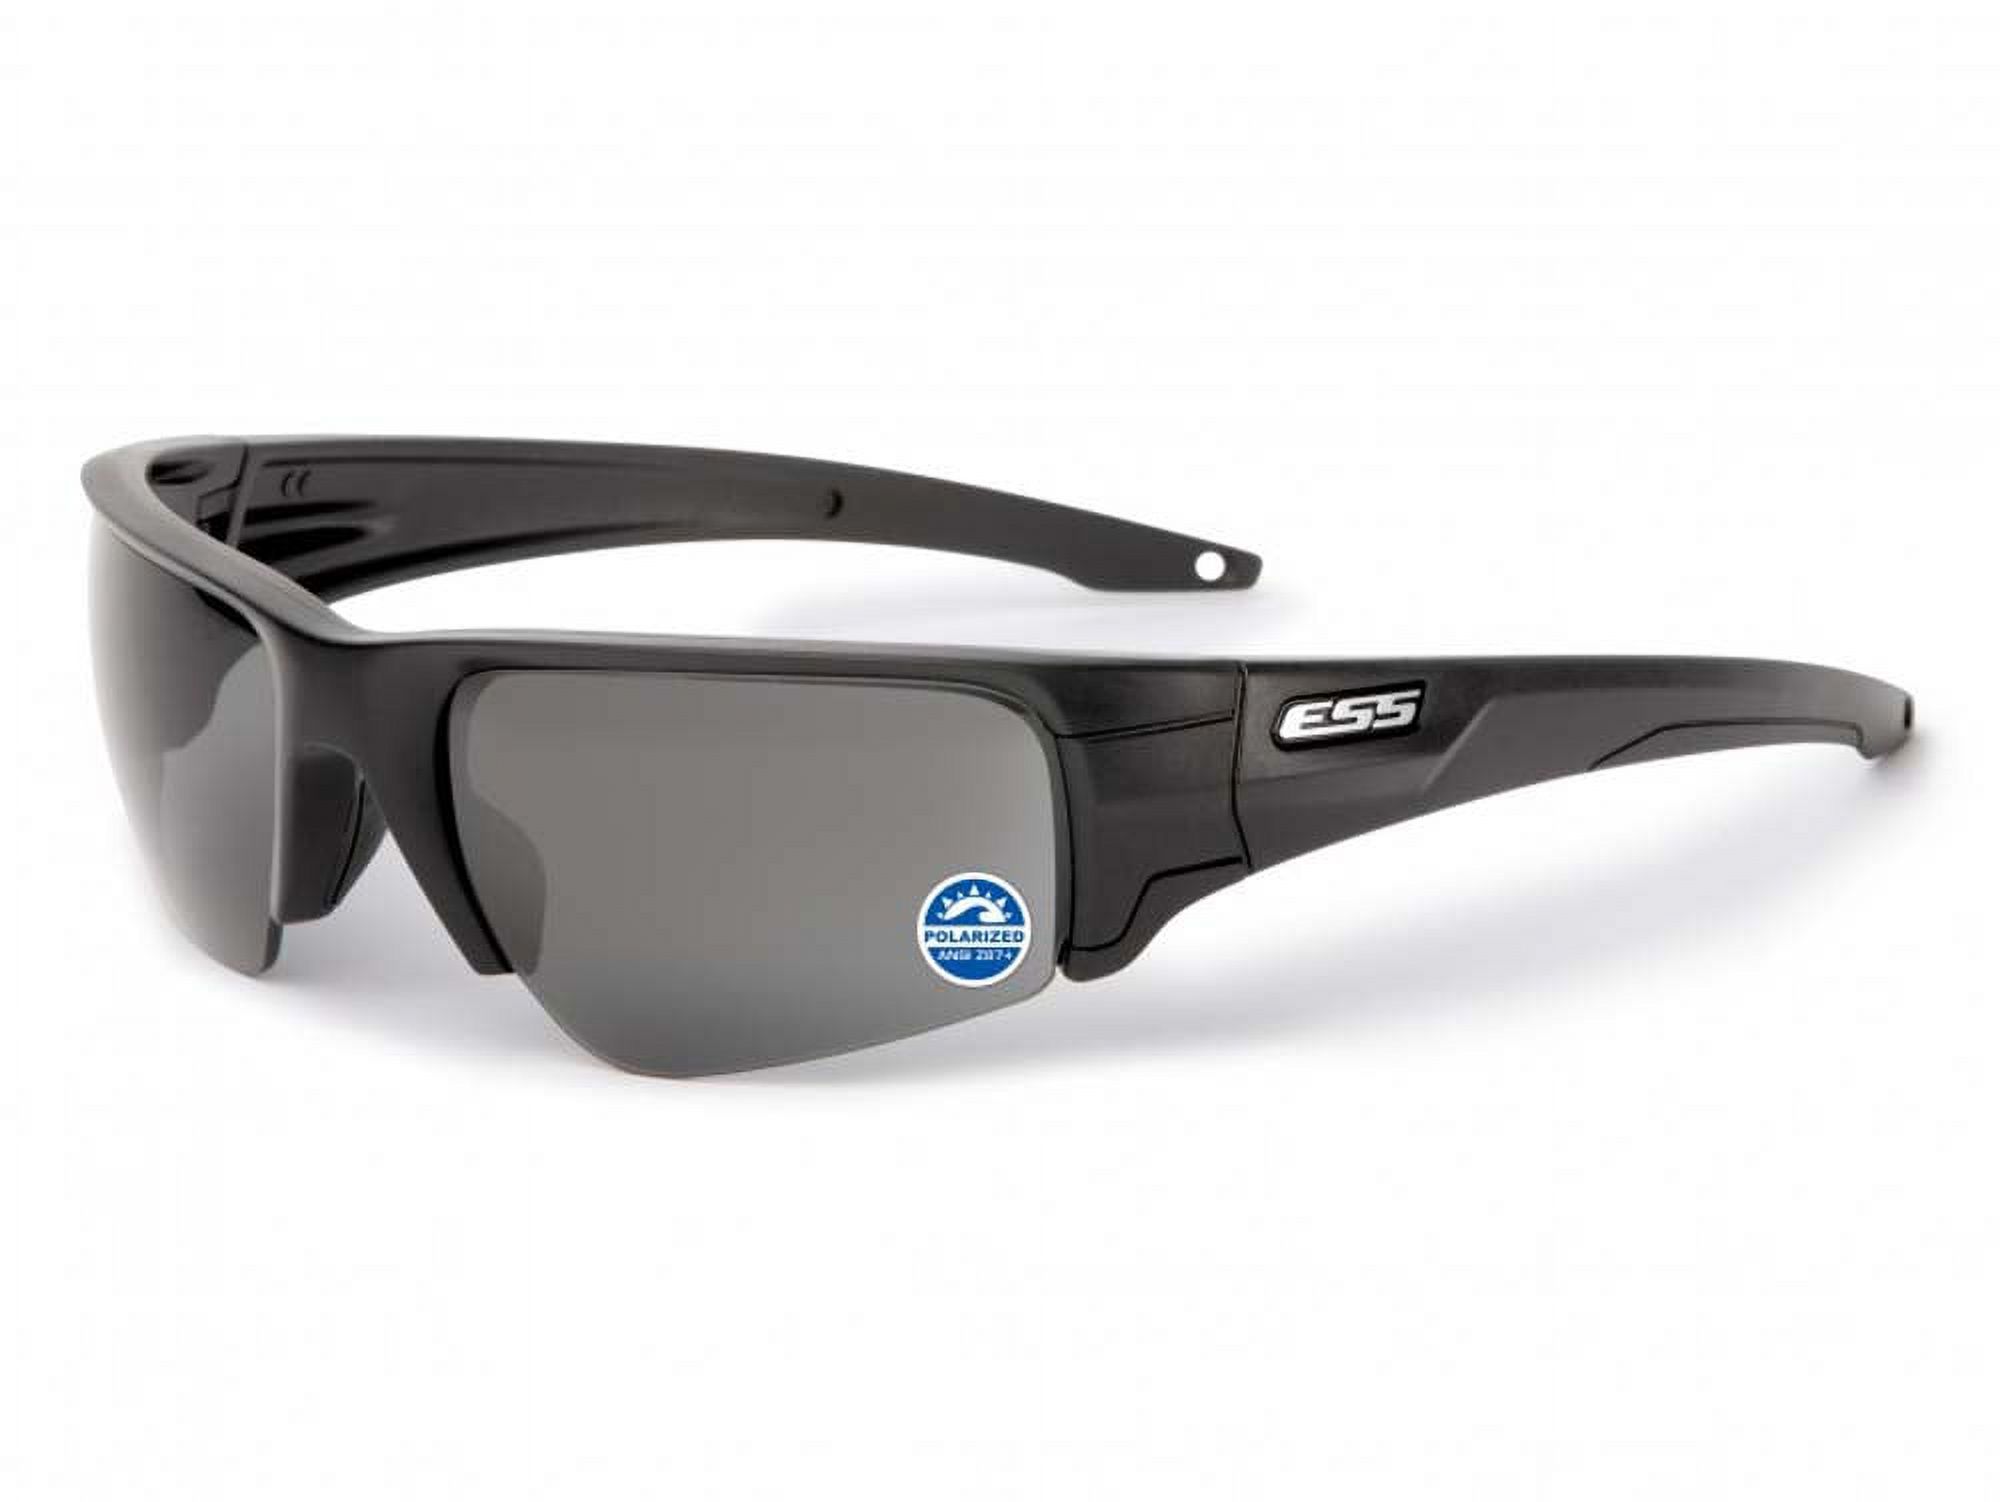 ESS Sunglasses Crossbow Black Silver Logo Polarized Mirrored Gray Lens - image 1 of 2